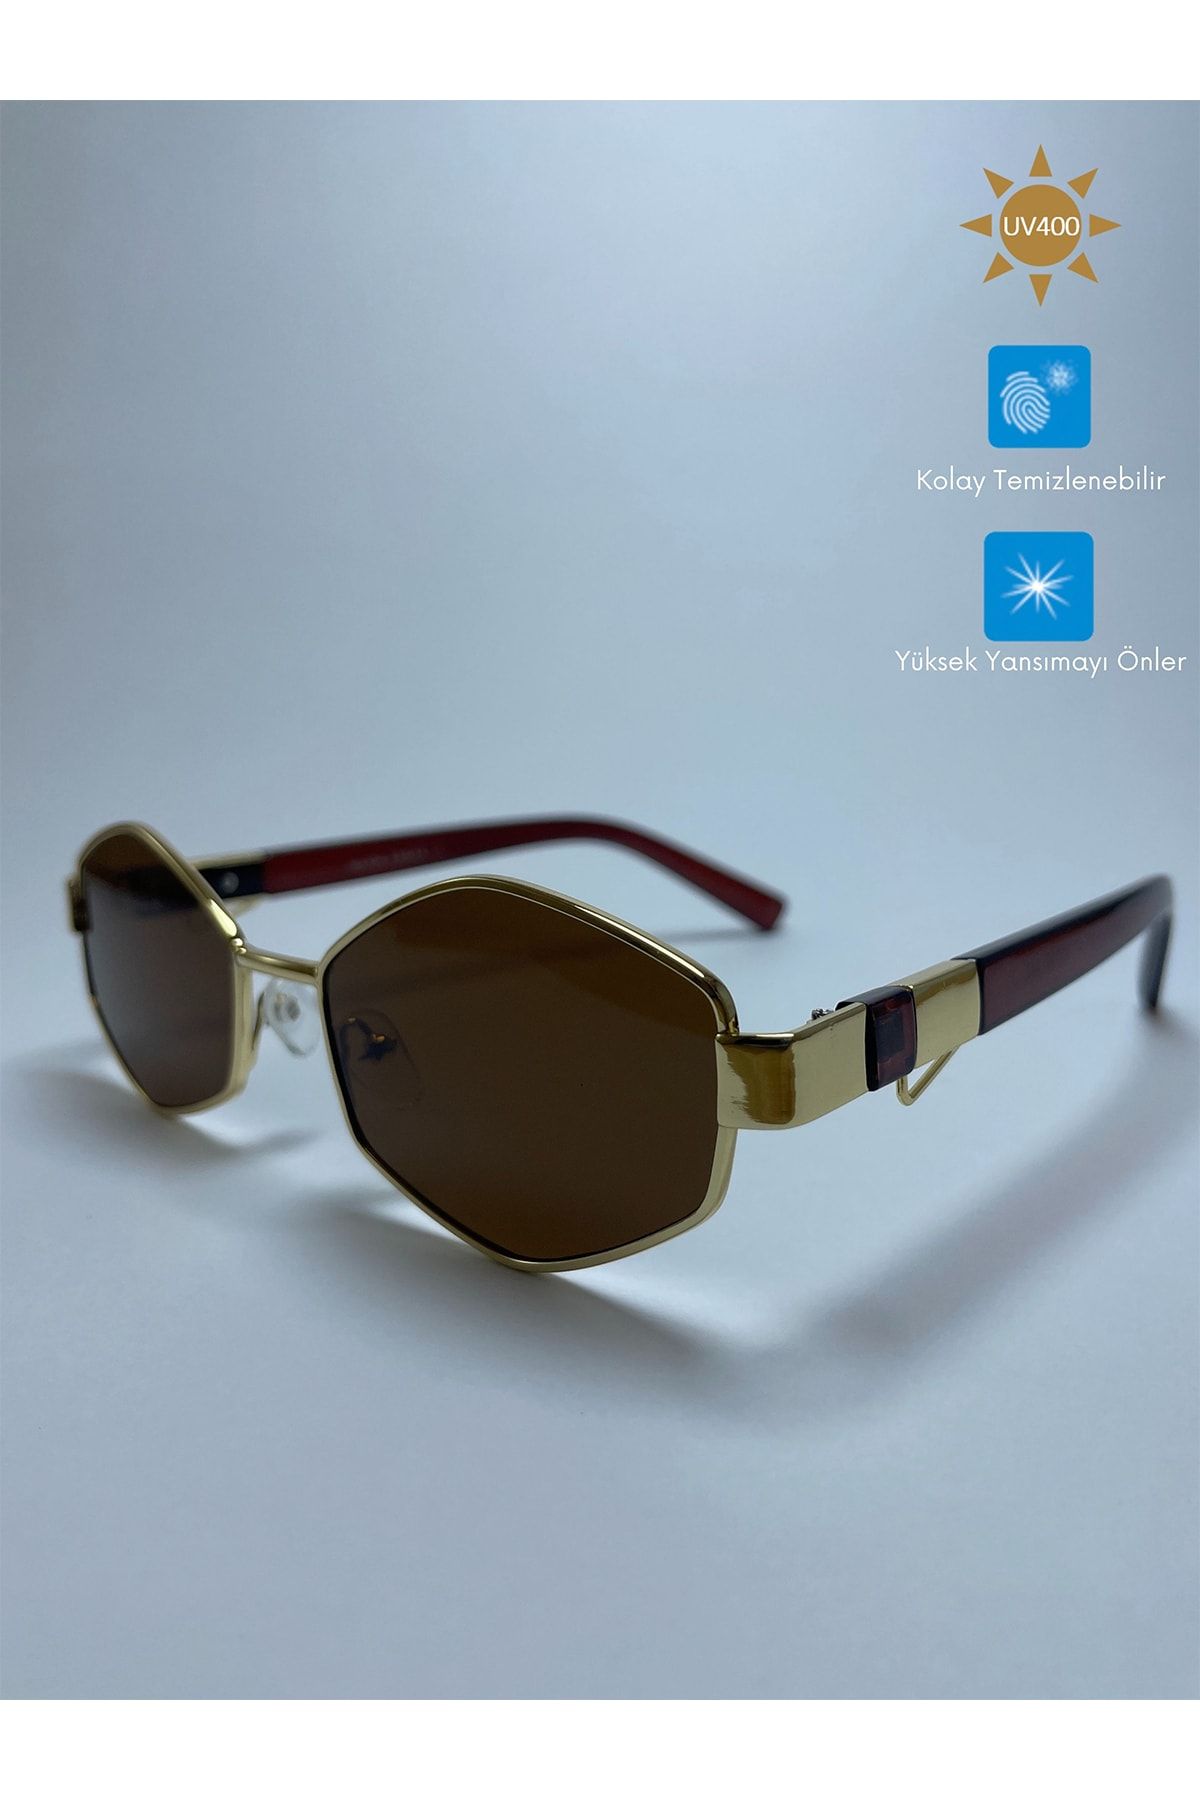 VisionGlasses Vg013 Kahverengi Retro Lüks Kadın Güneş Gözlüğü